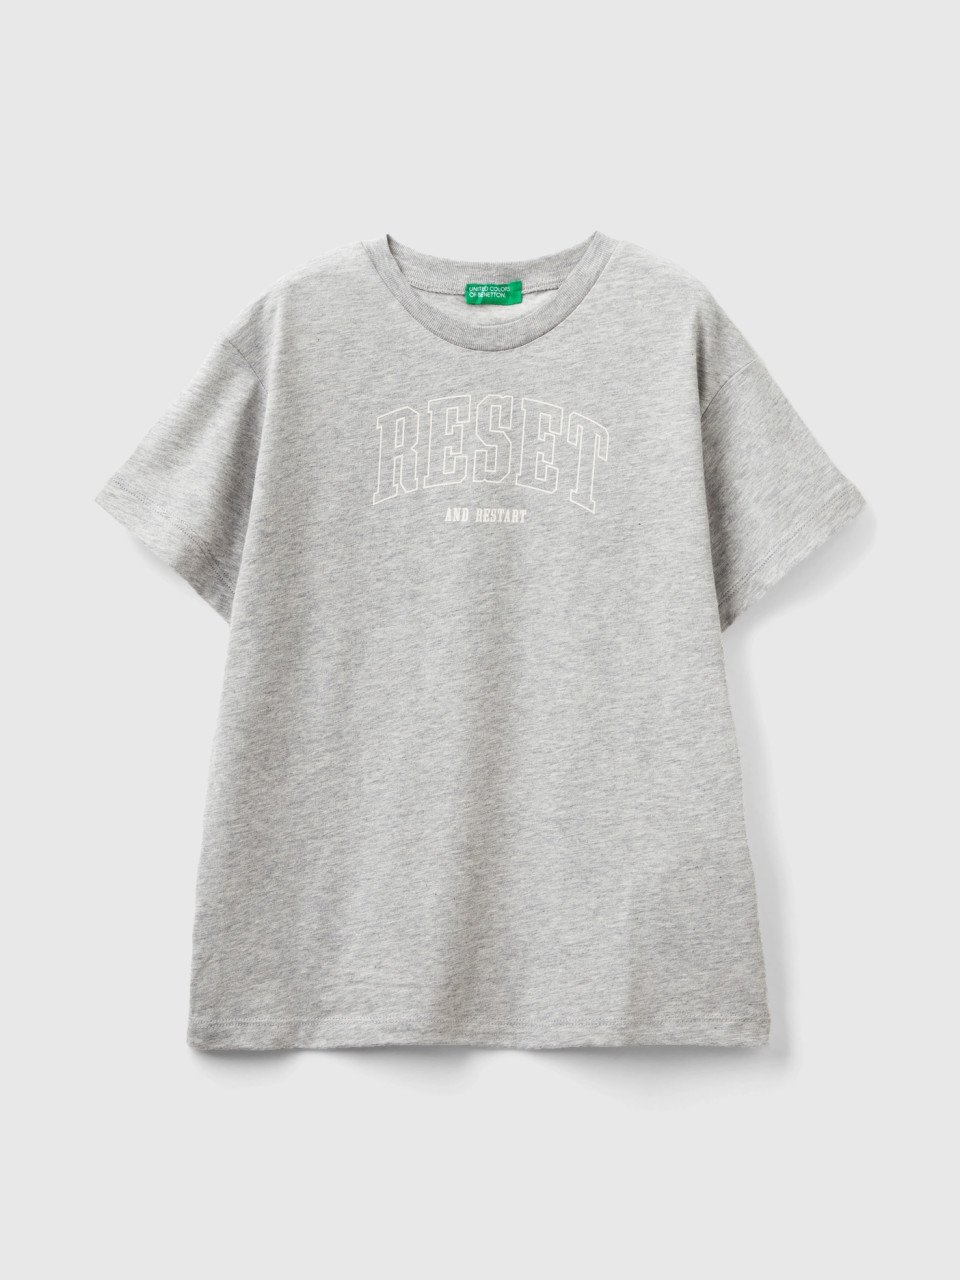 Benetton, Camiseta De Algodón Orgánico Con Estampado, Gris Claro, Niños